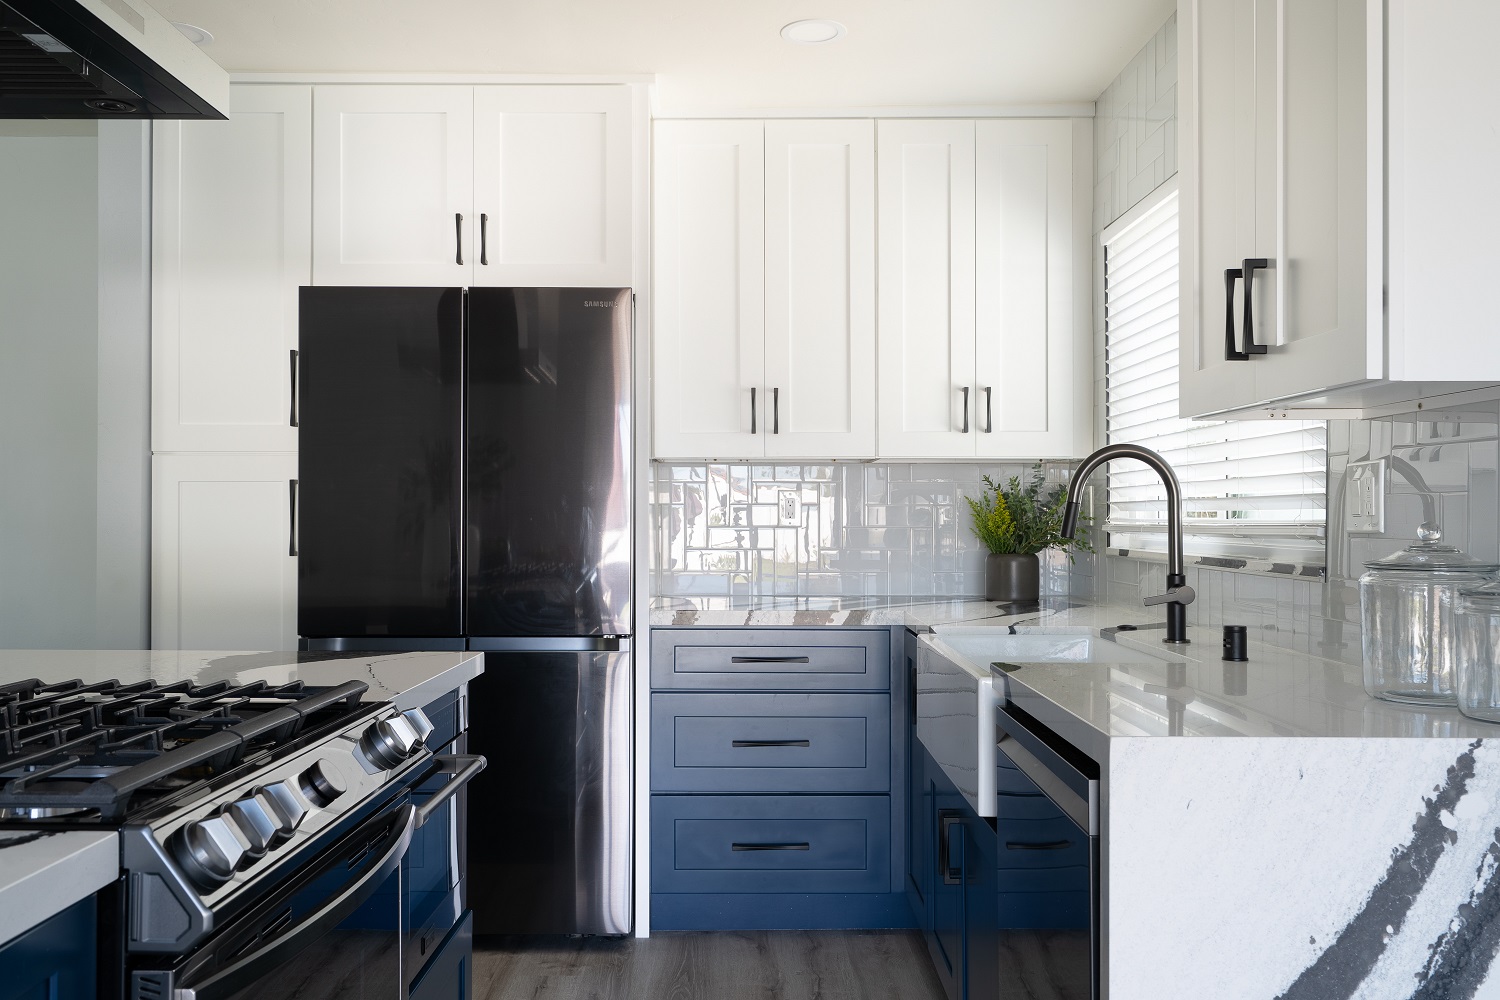 San Diego kitchen renovation experts